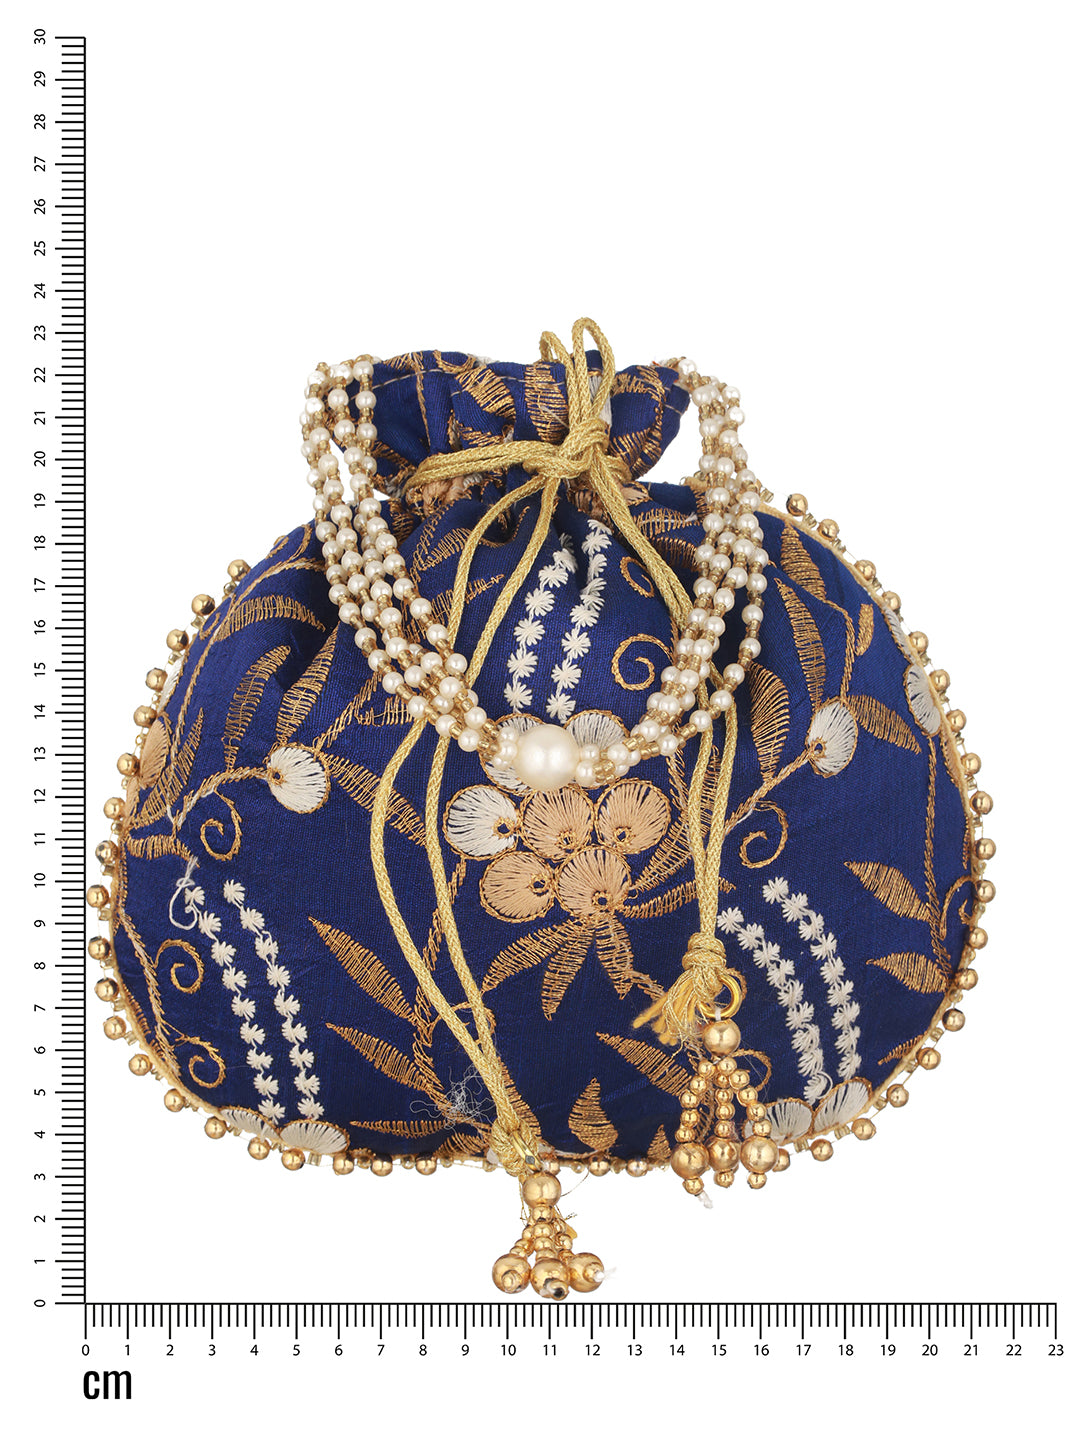 Royal Blue & Gold Embroidered Embellished Potli Clutch - Jazzandsizzle